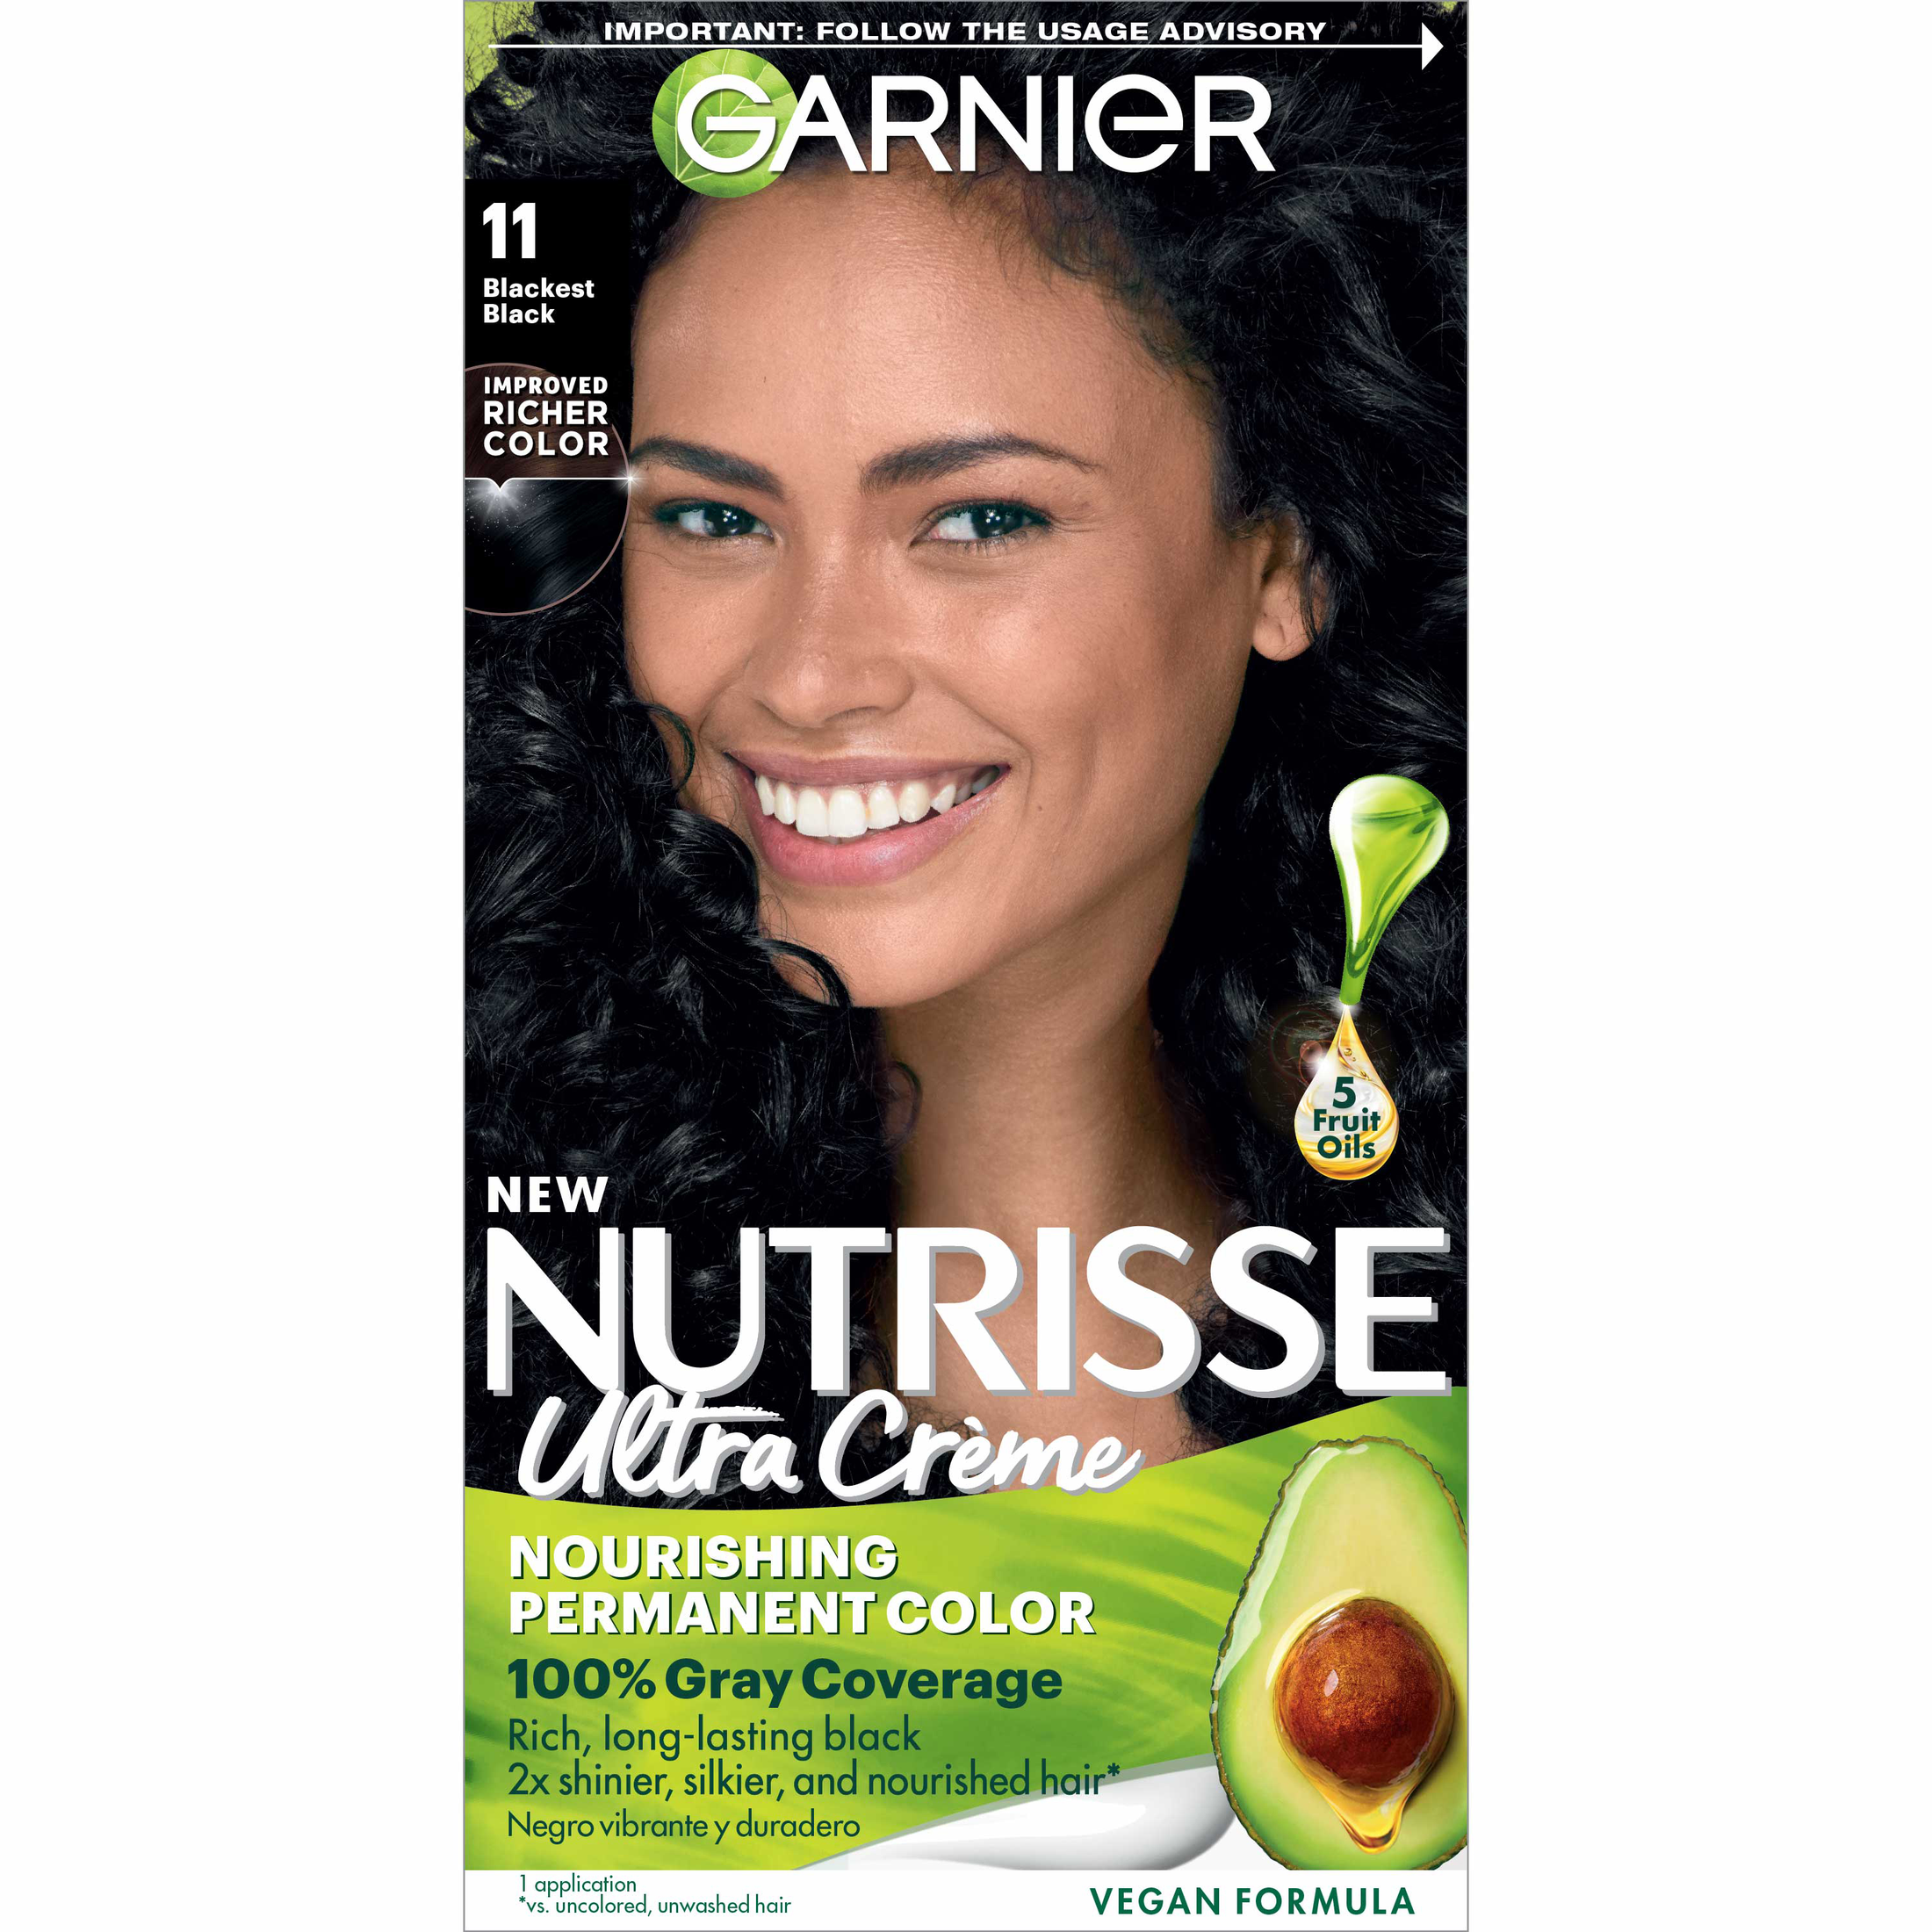 Garnier Nutrisse Nourishing Hair Color Creme, 11 Blackest Black - image 1 of 11